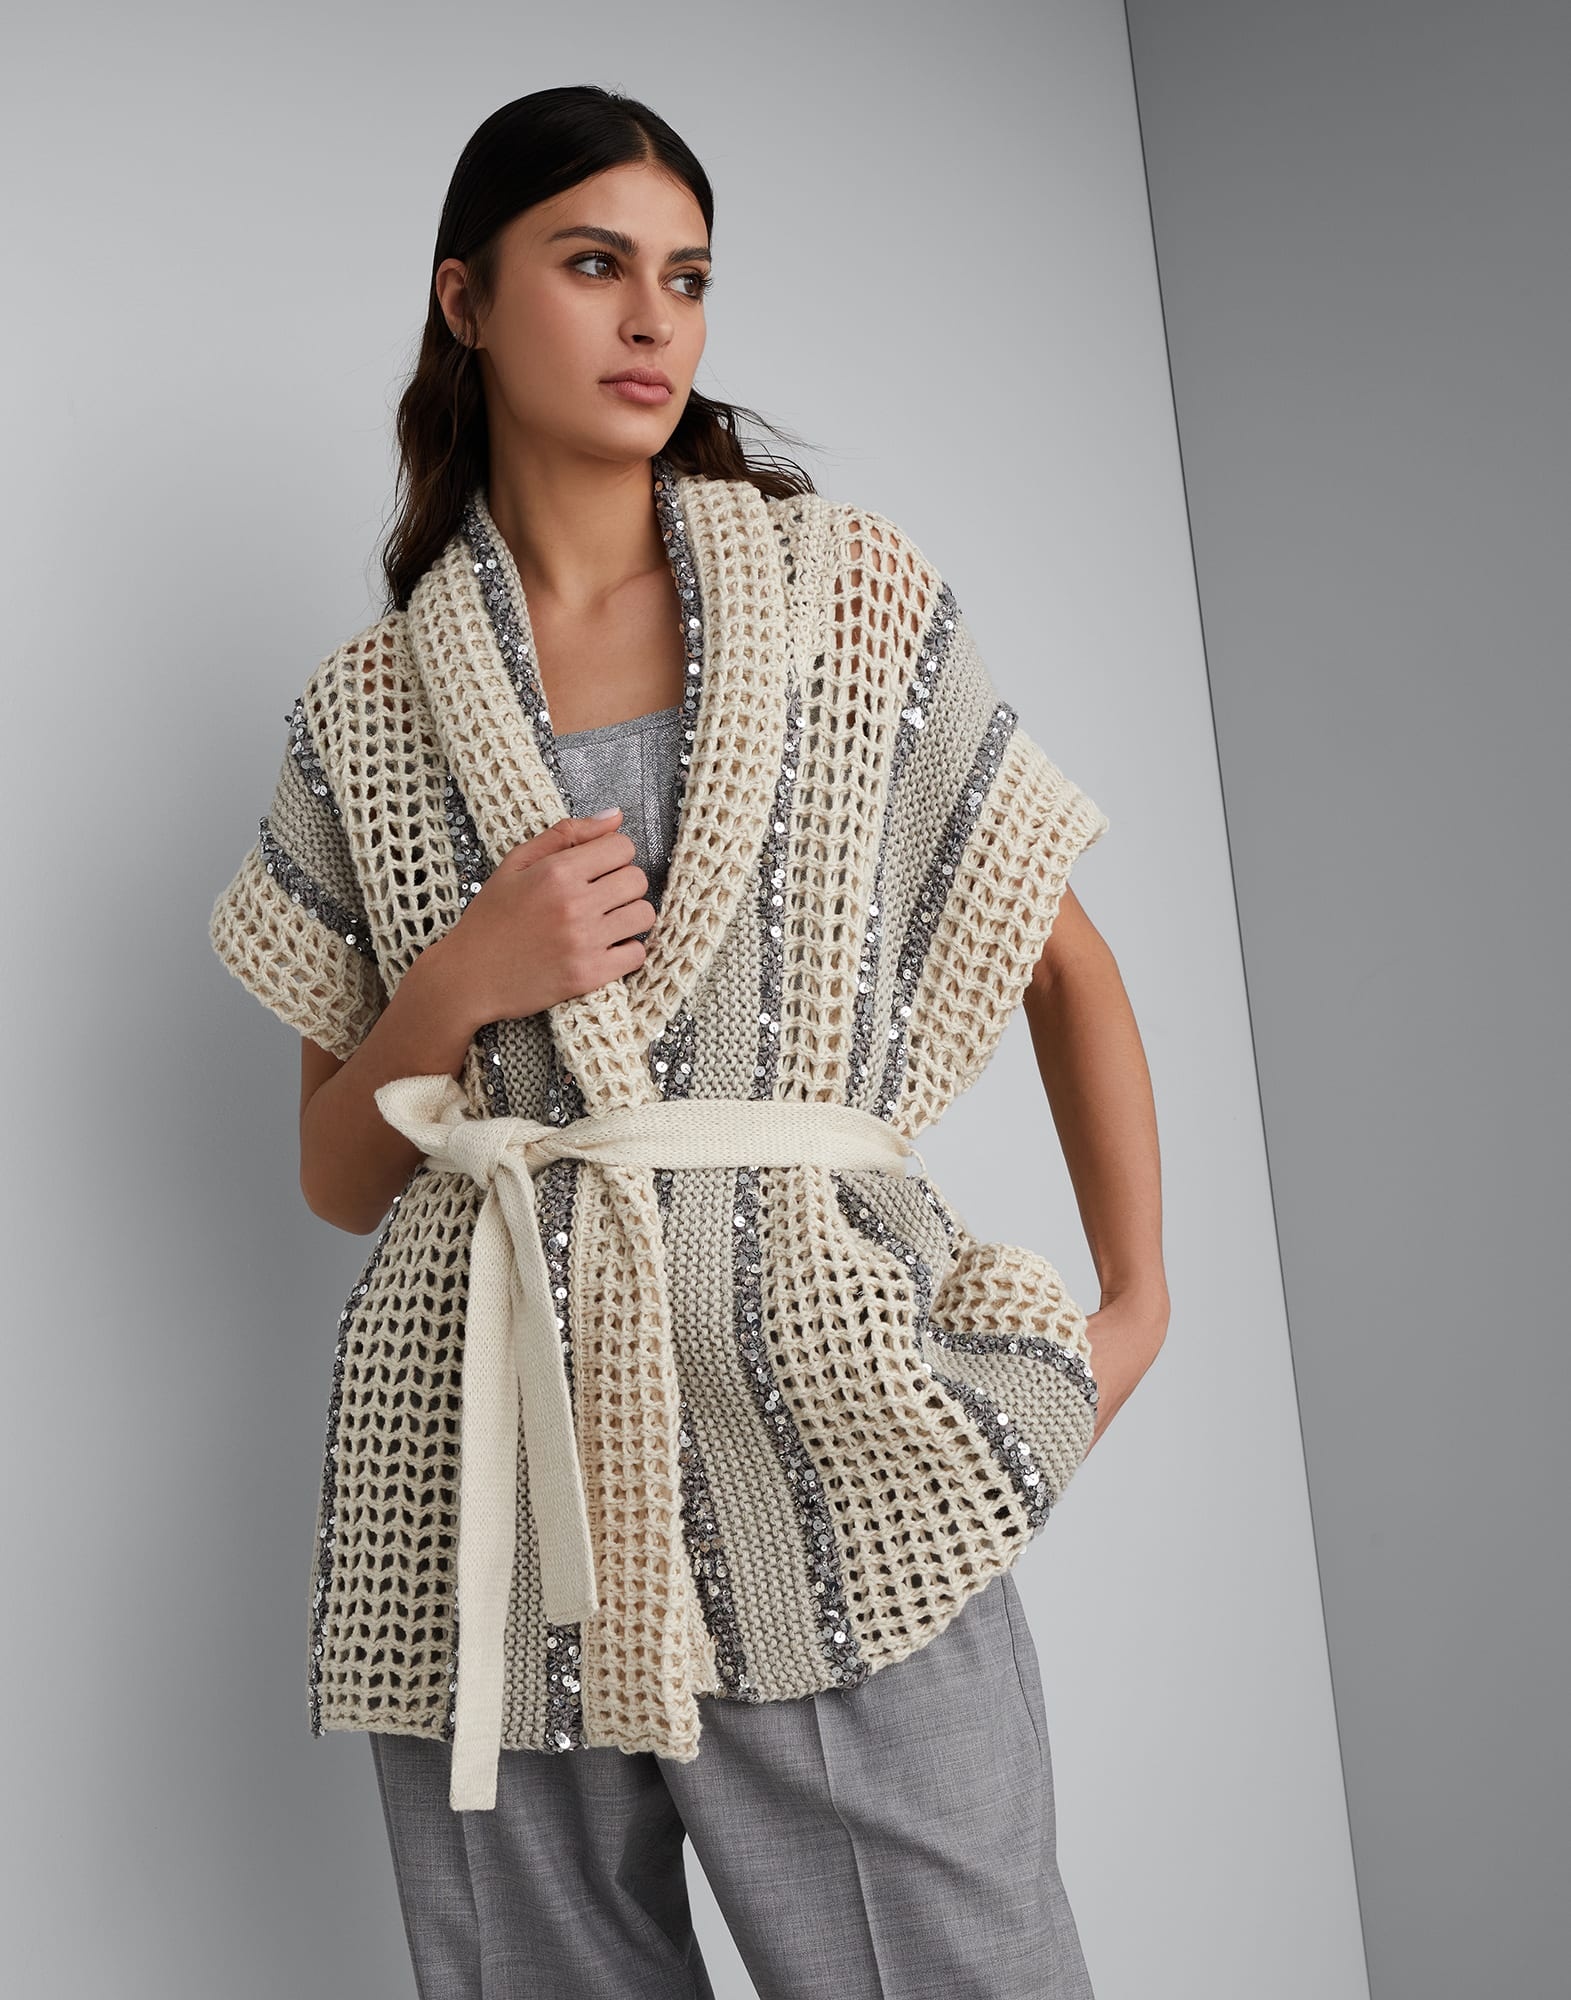 Dazzling stripe net knit cardigan in jute, linen, cotton and silk with belt - 1